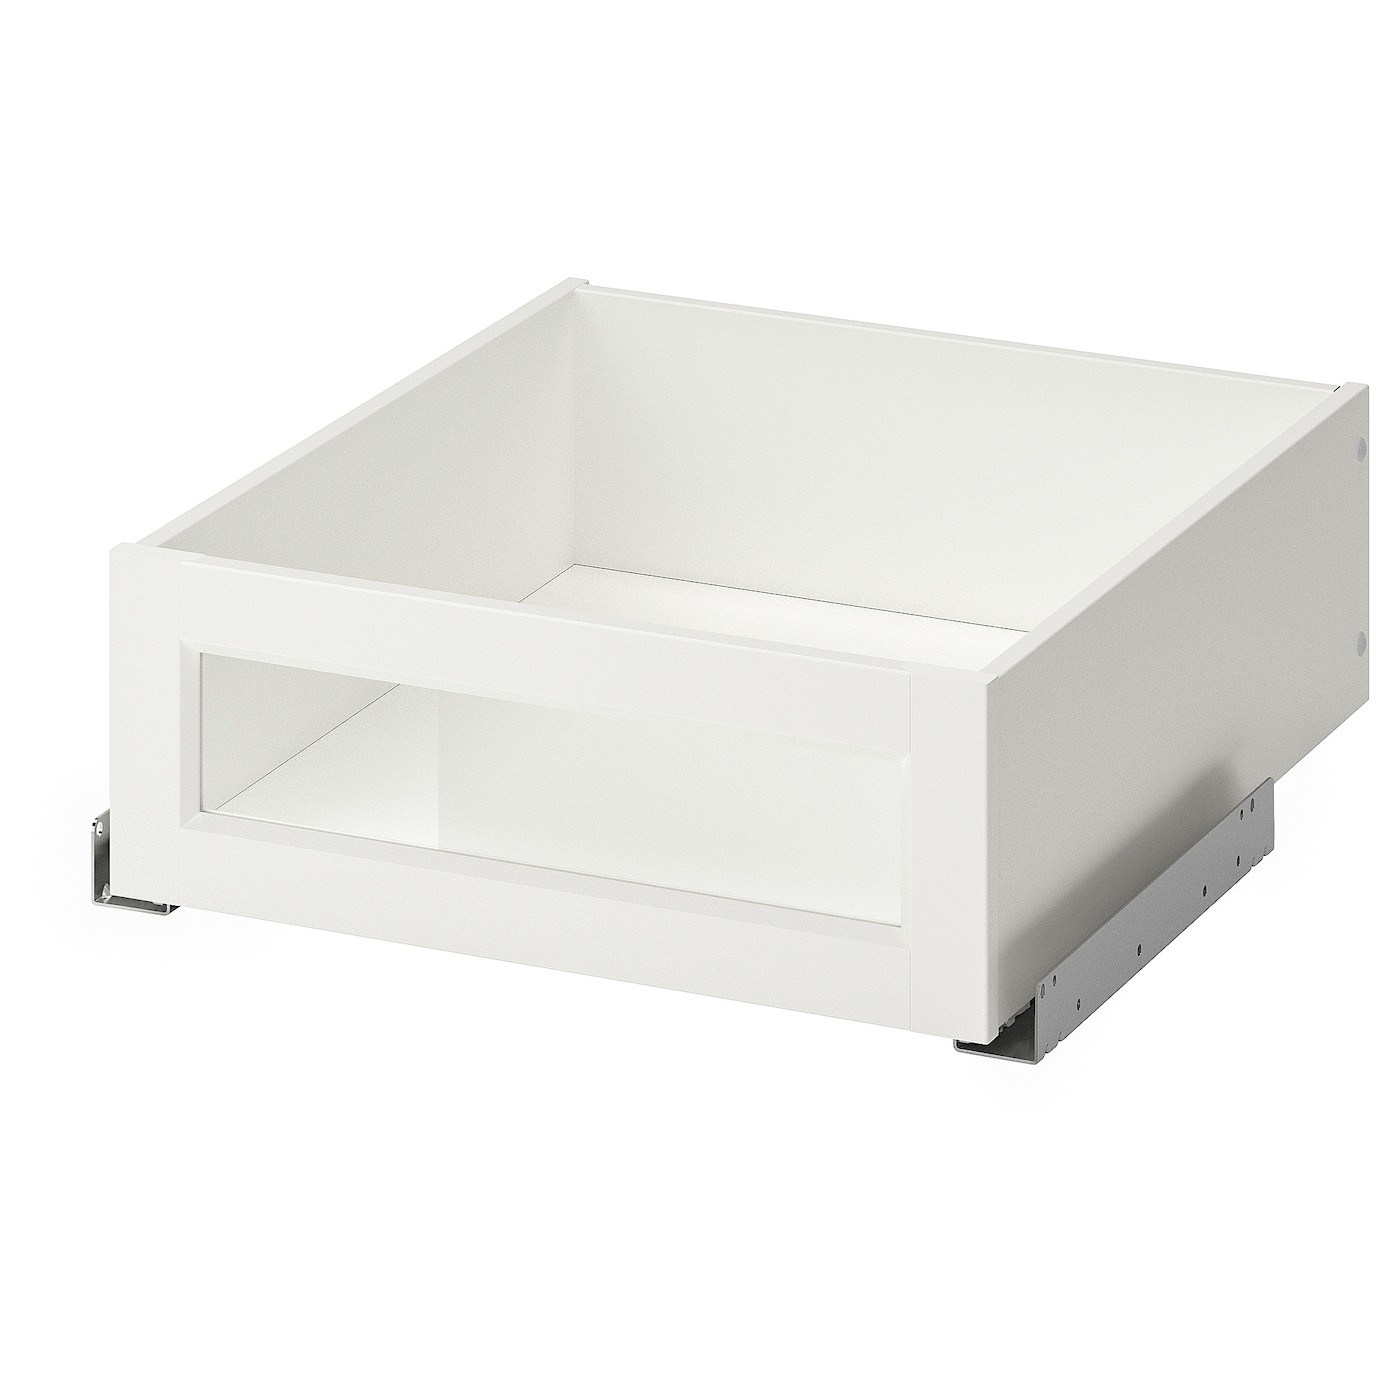 IKEA KOMPLEMENT КОМПЛЕМЕНТ Шухляда скляна фронтальна панель, білий, 50x58 см 30447023 304.470.23